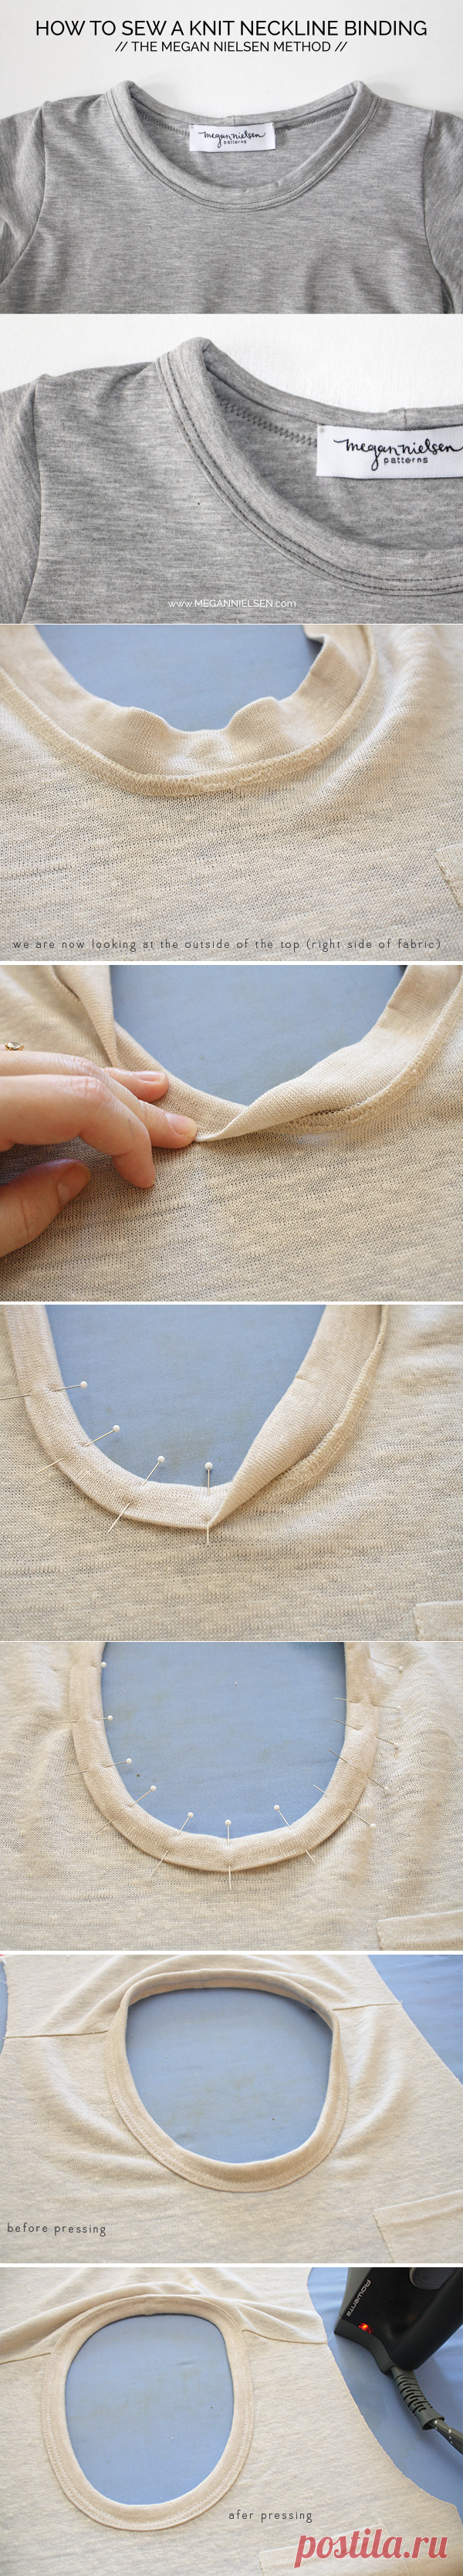 How to sew a knit neckline binding // the Megan Nielsen method — megan nielsen design diary